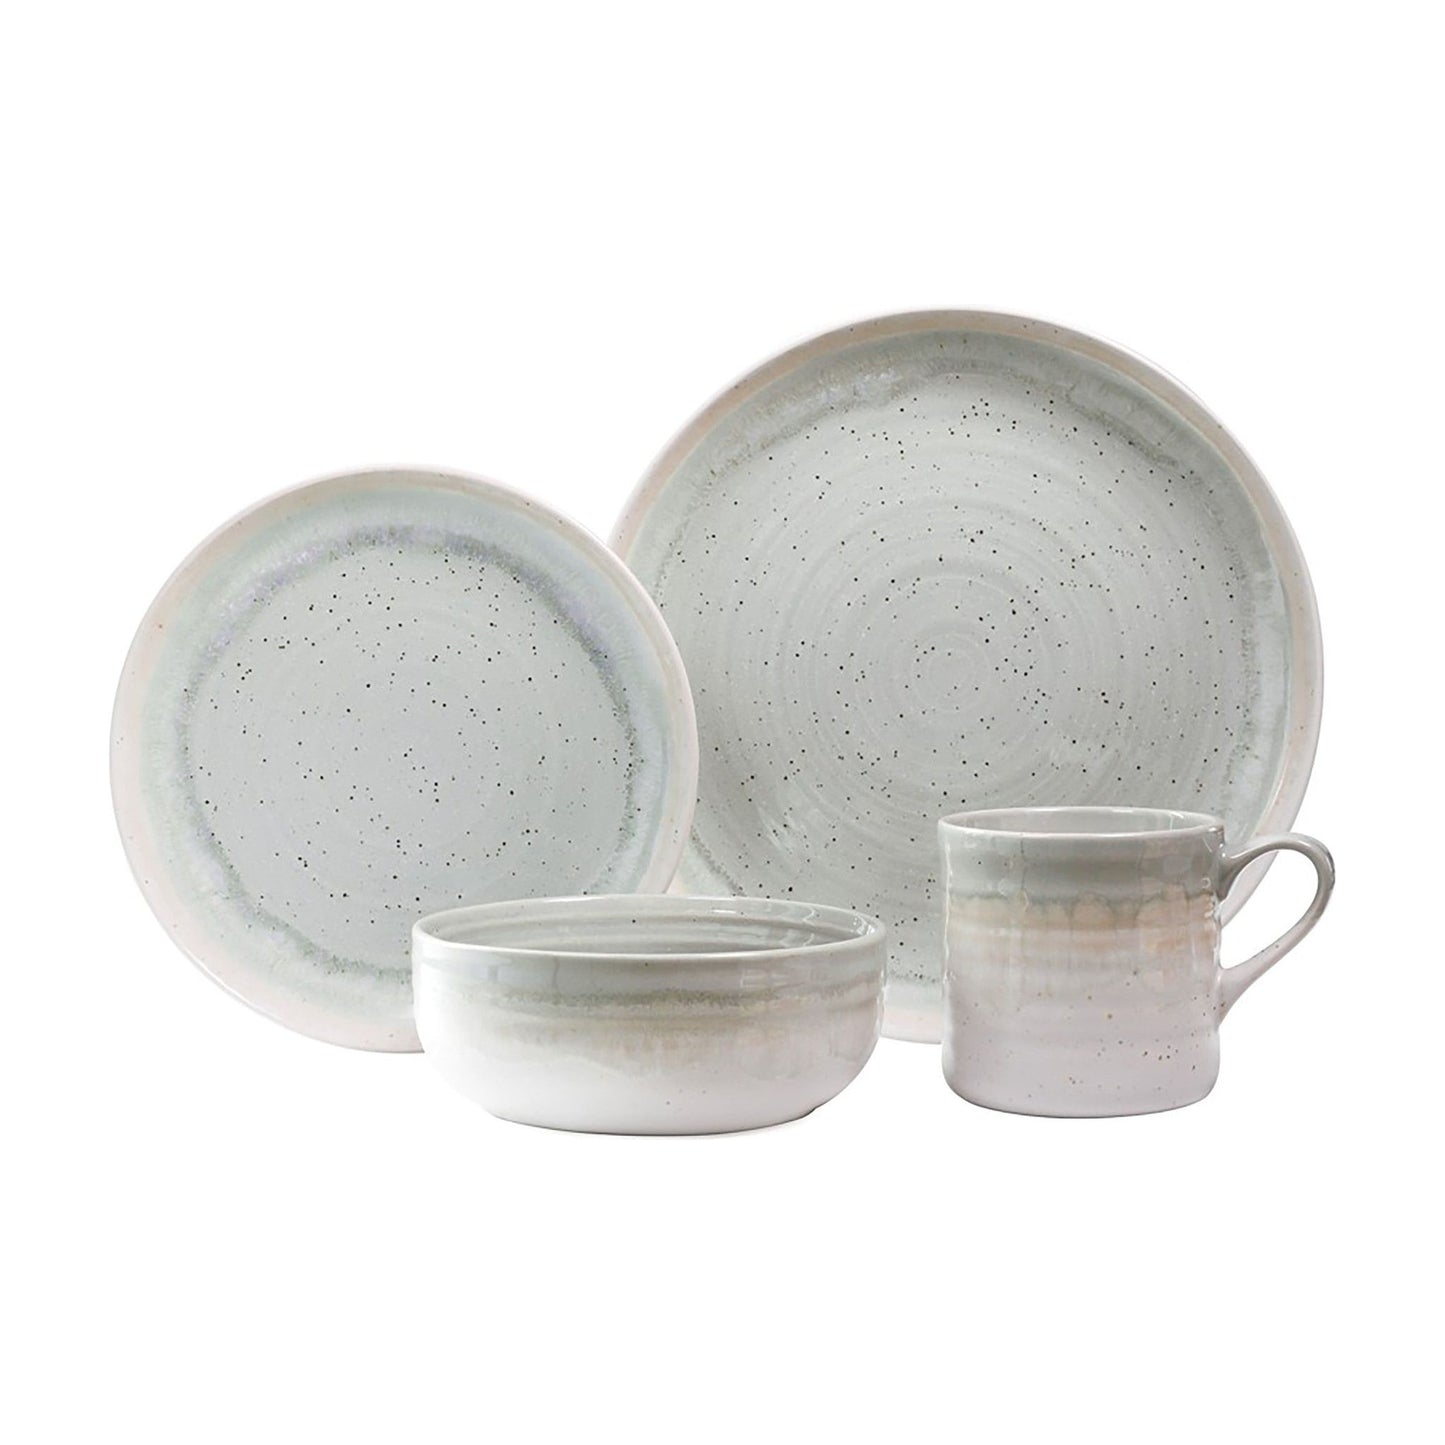 Pale Aqua Ceramic Dinnerware Set - Sixteen Piece